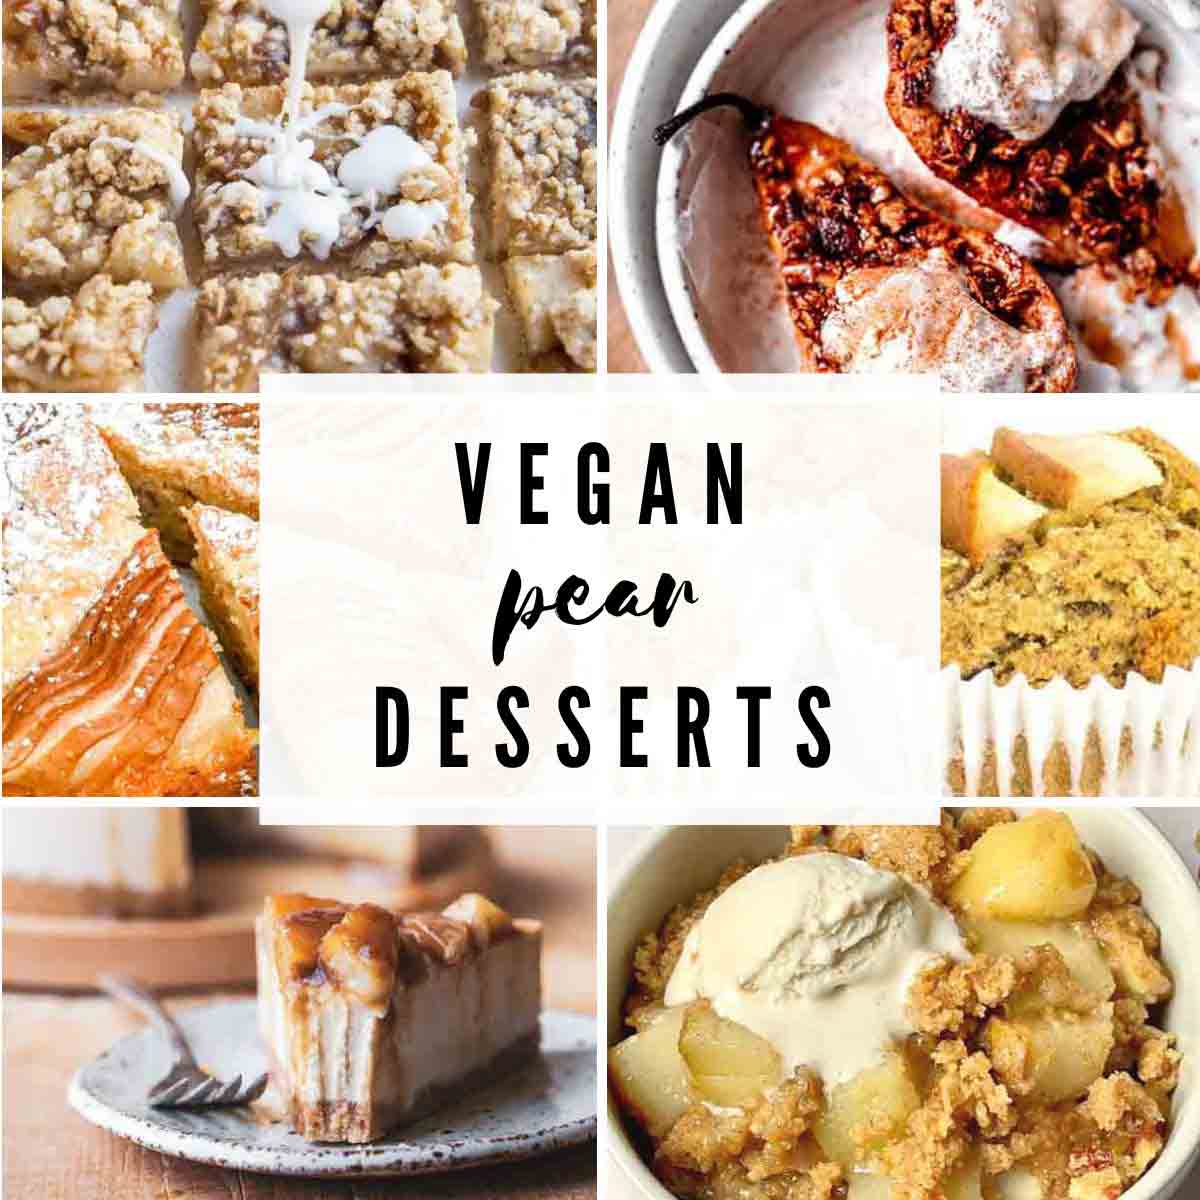 Vegan Pear Desserts Image Collage